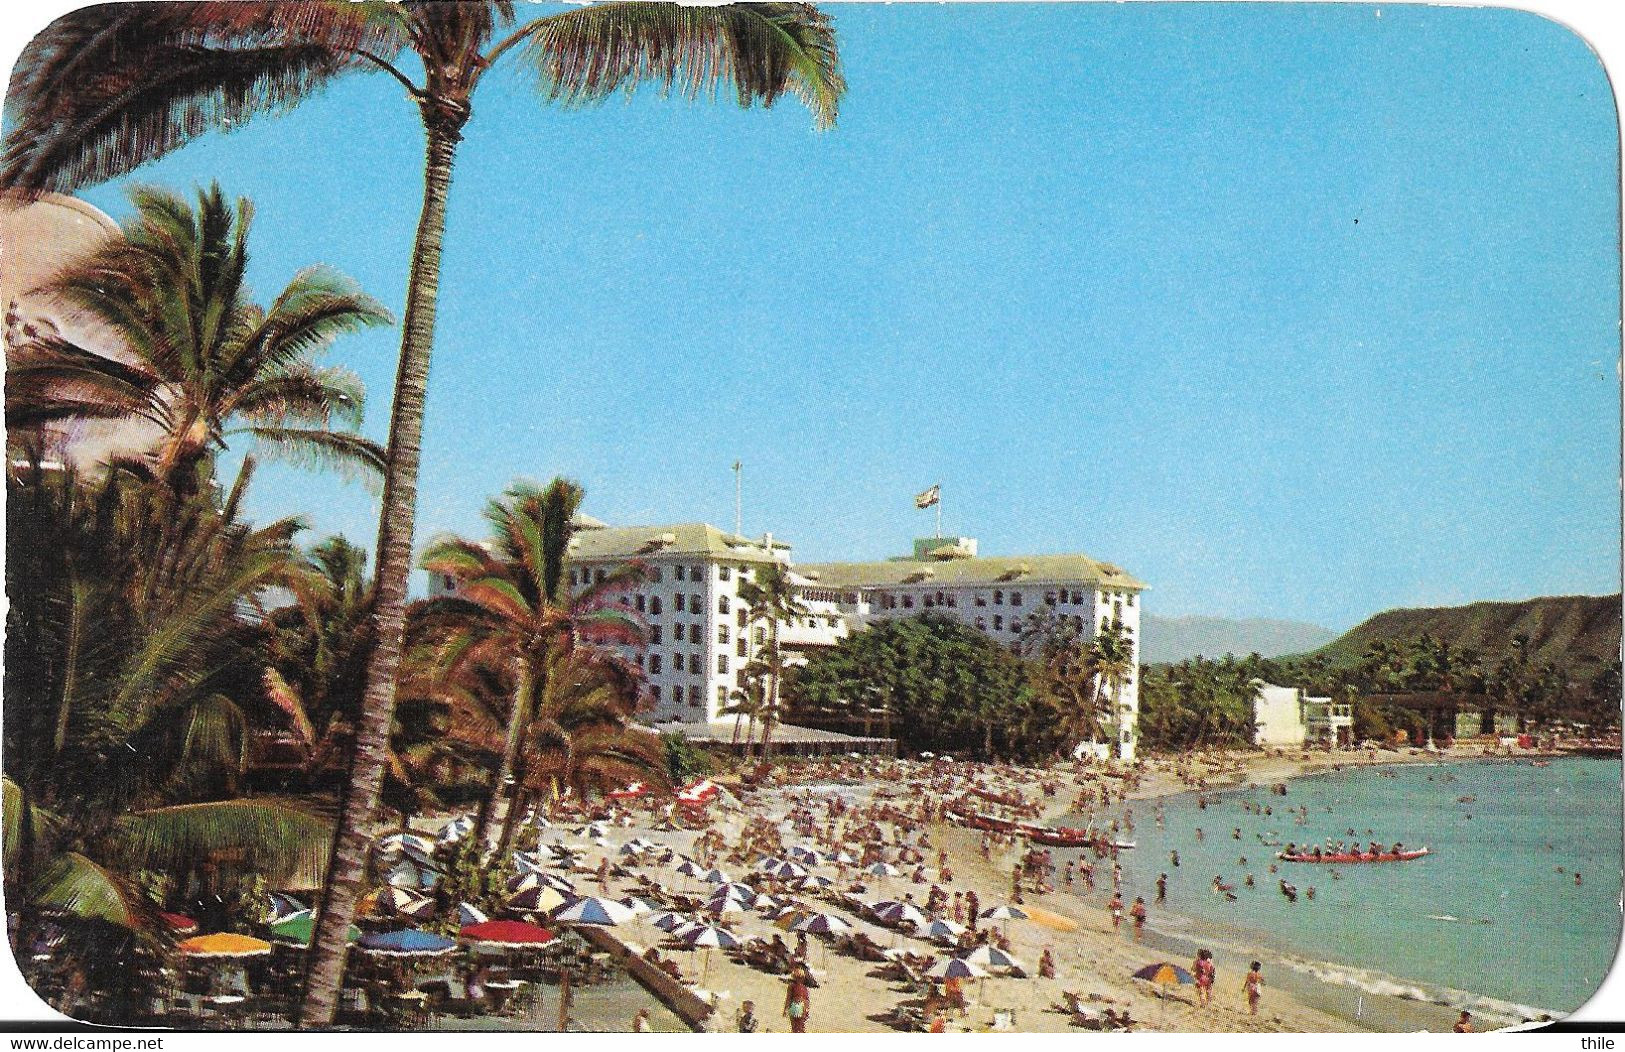 Waikiki Beach And The Moana Hotel - Honolulu